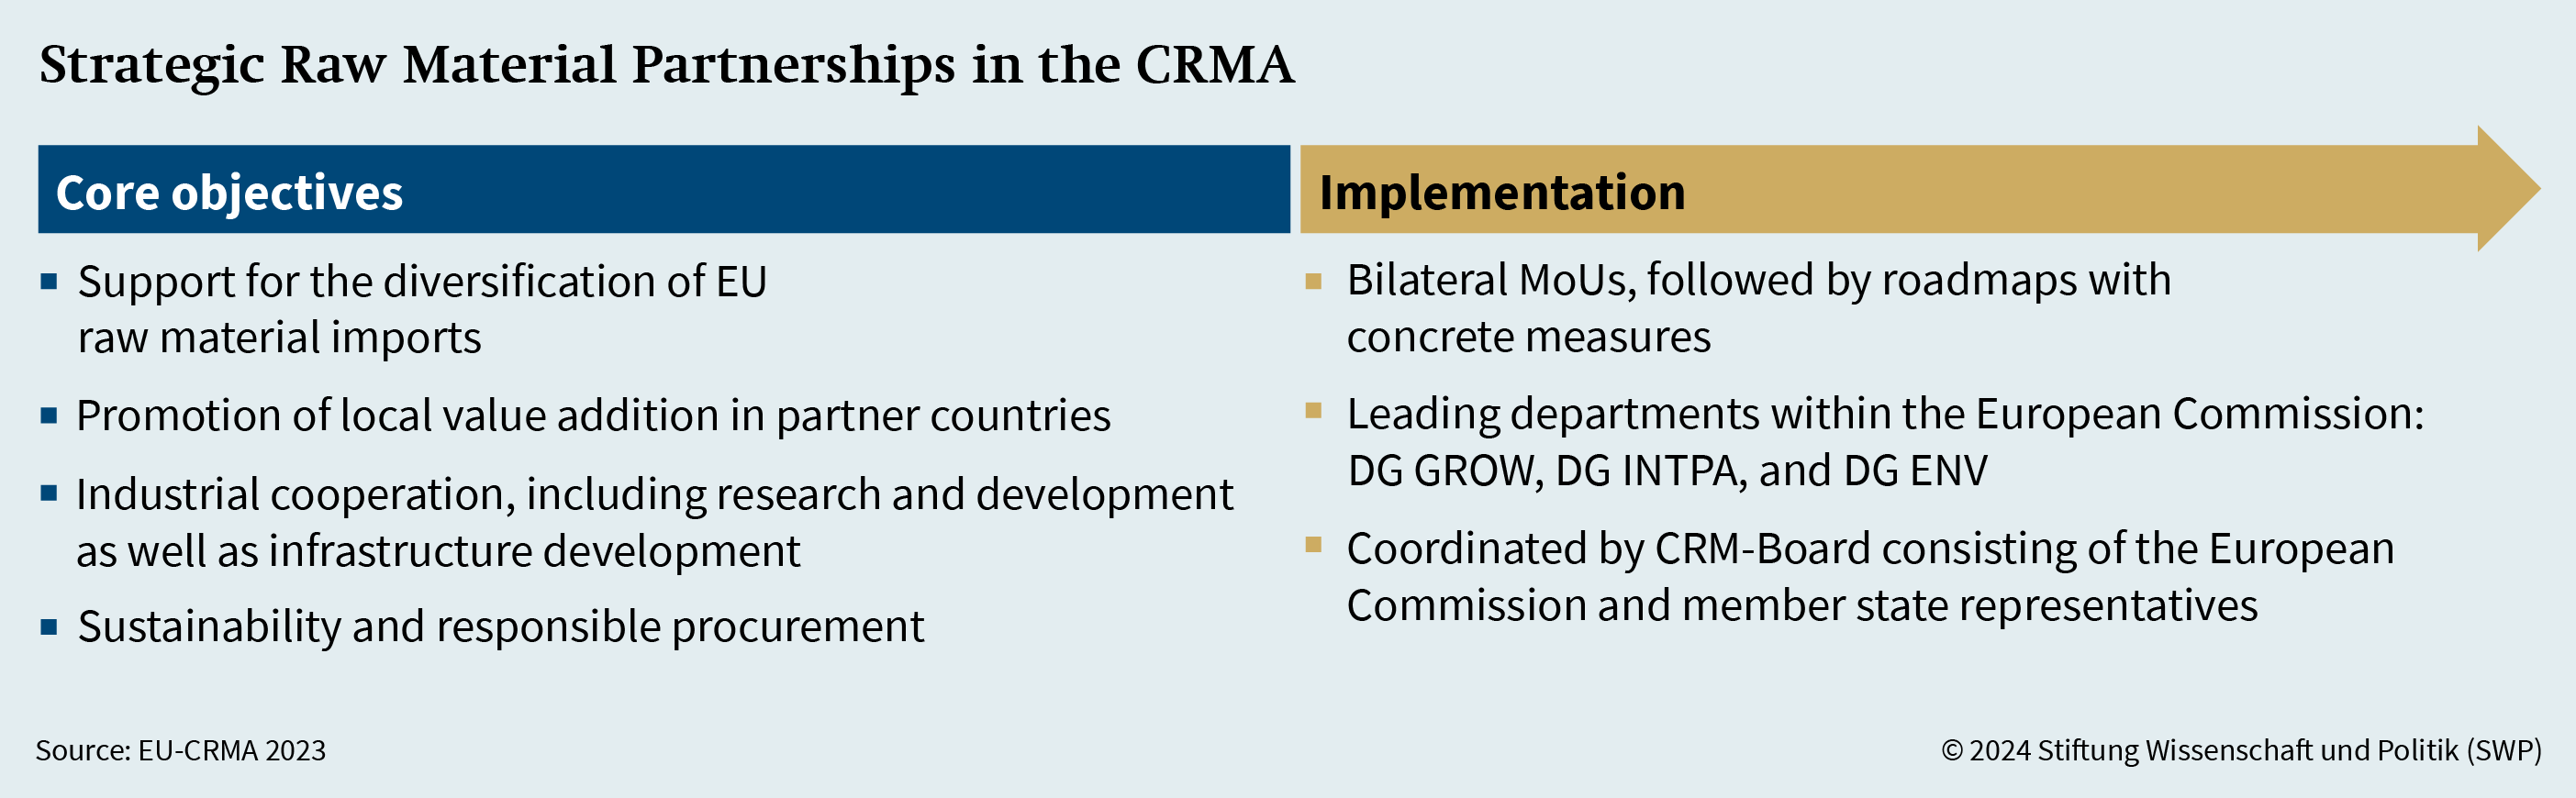 Figure 1: Strategic Raw Materials Partnerships in the CRMA